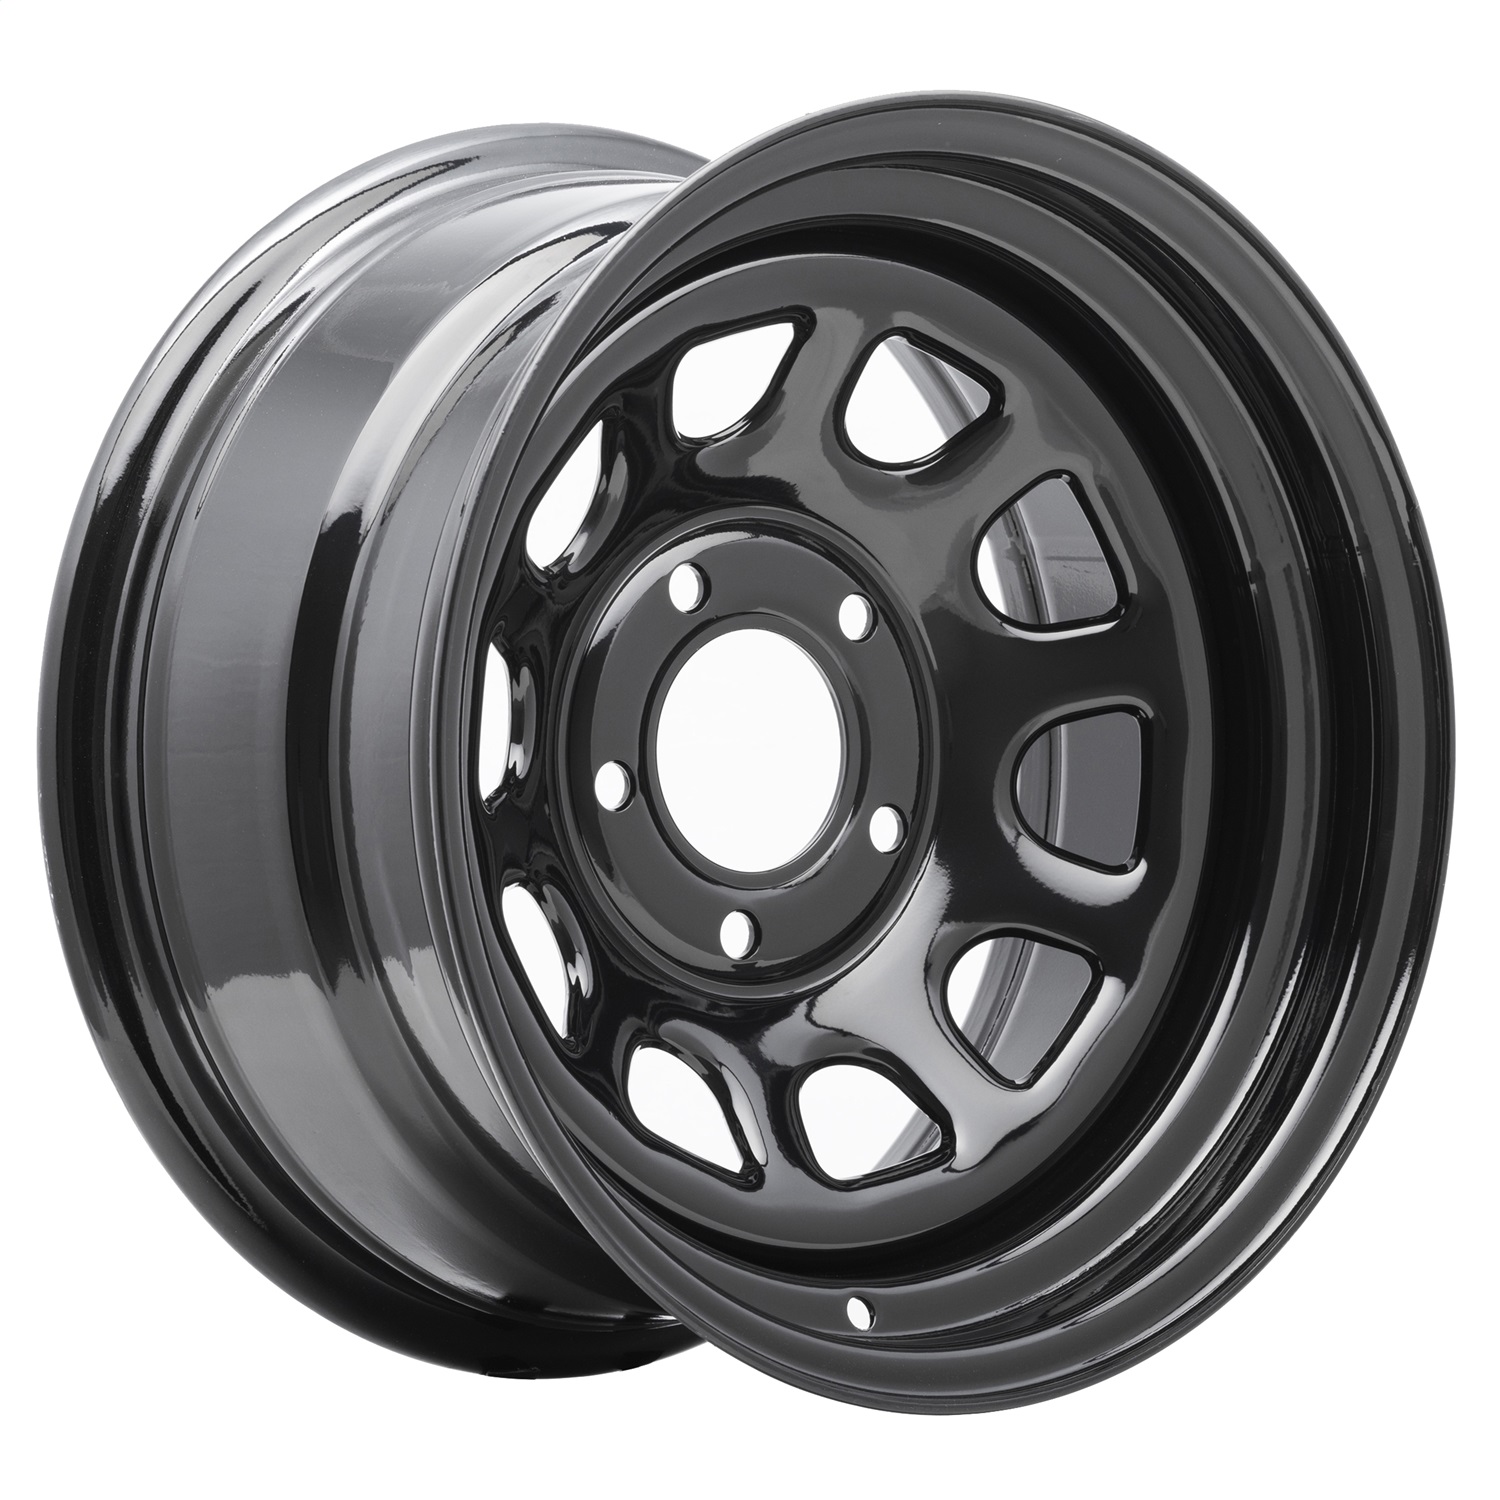 Pro Comp Wheels 51-5885 Rock Crawler Series 51 Black Wheel